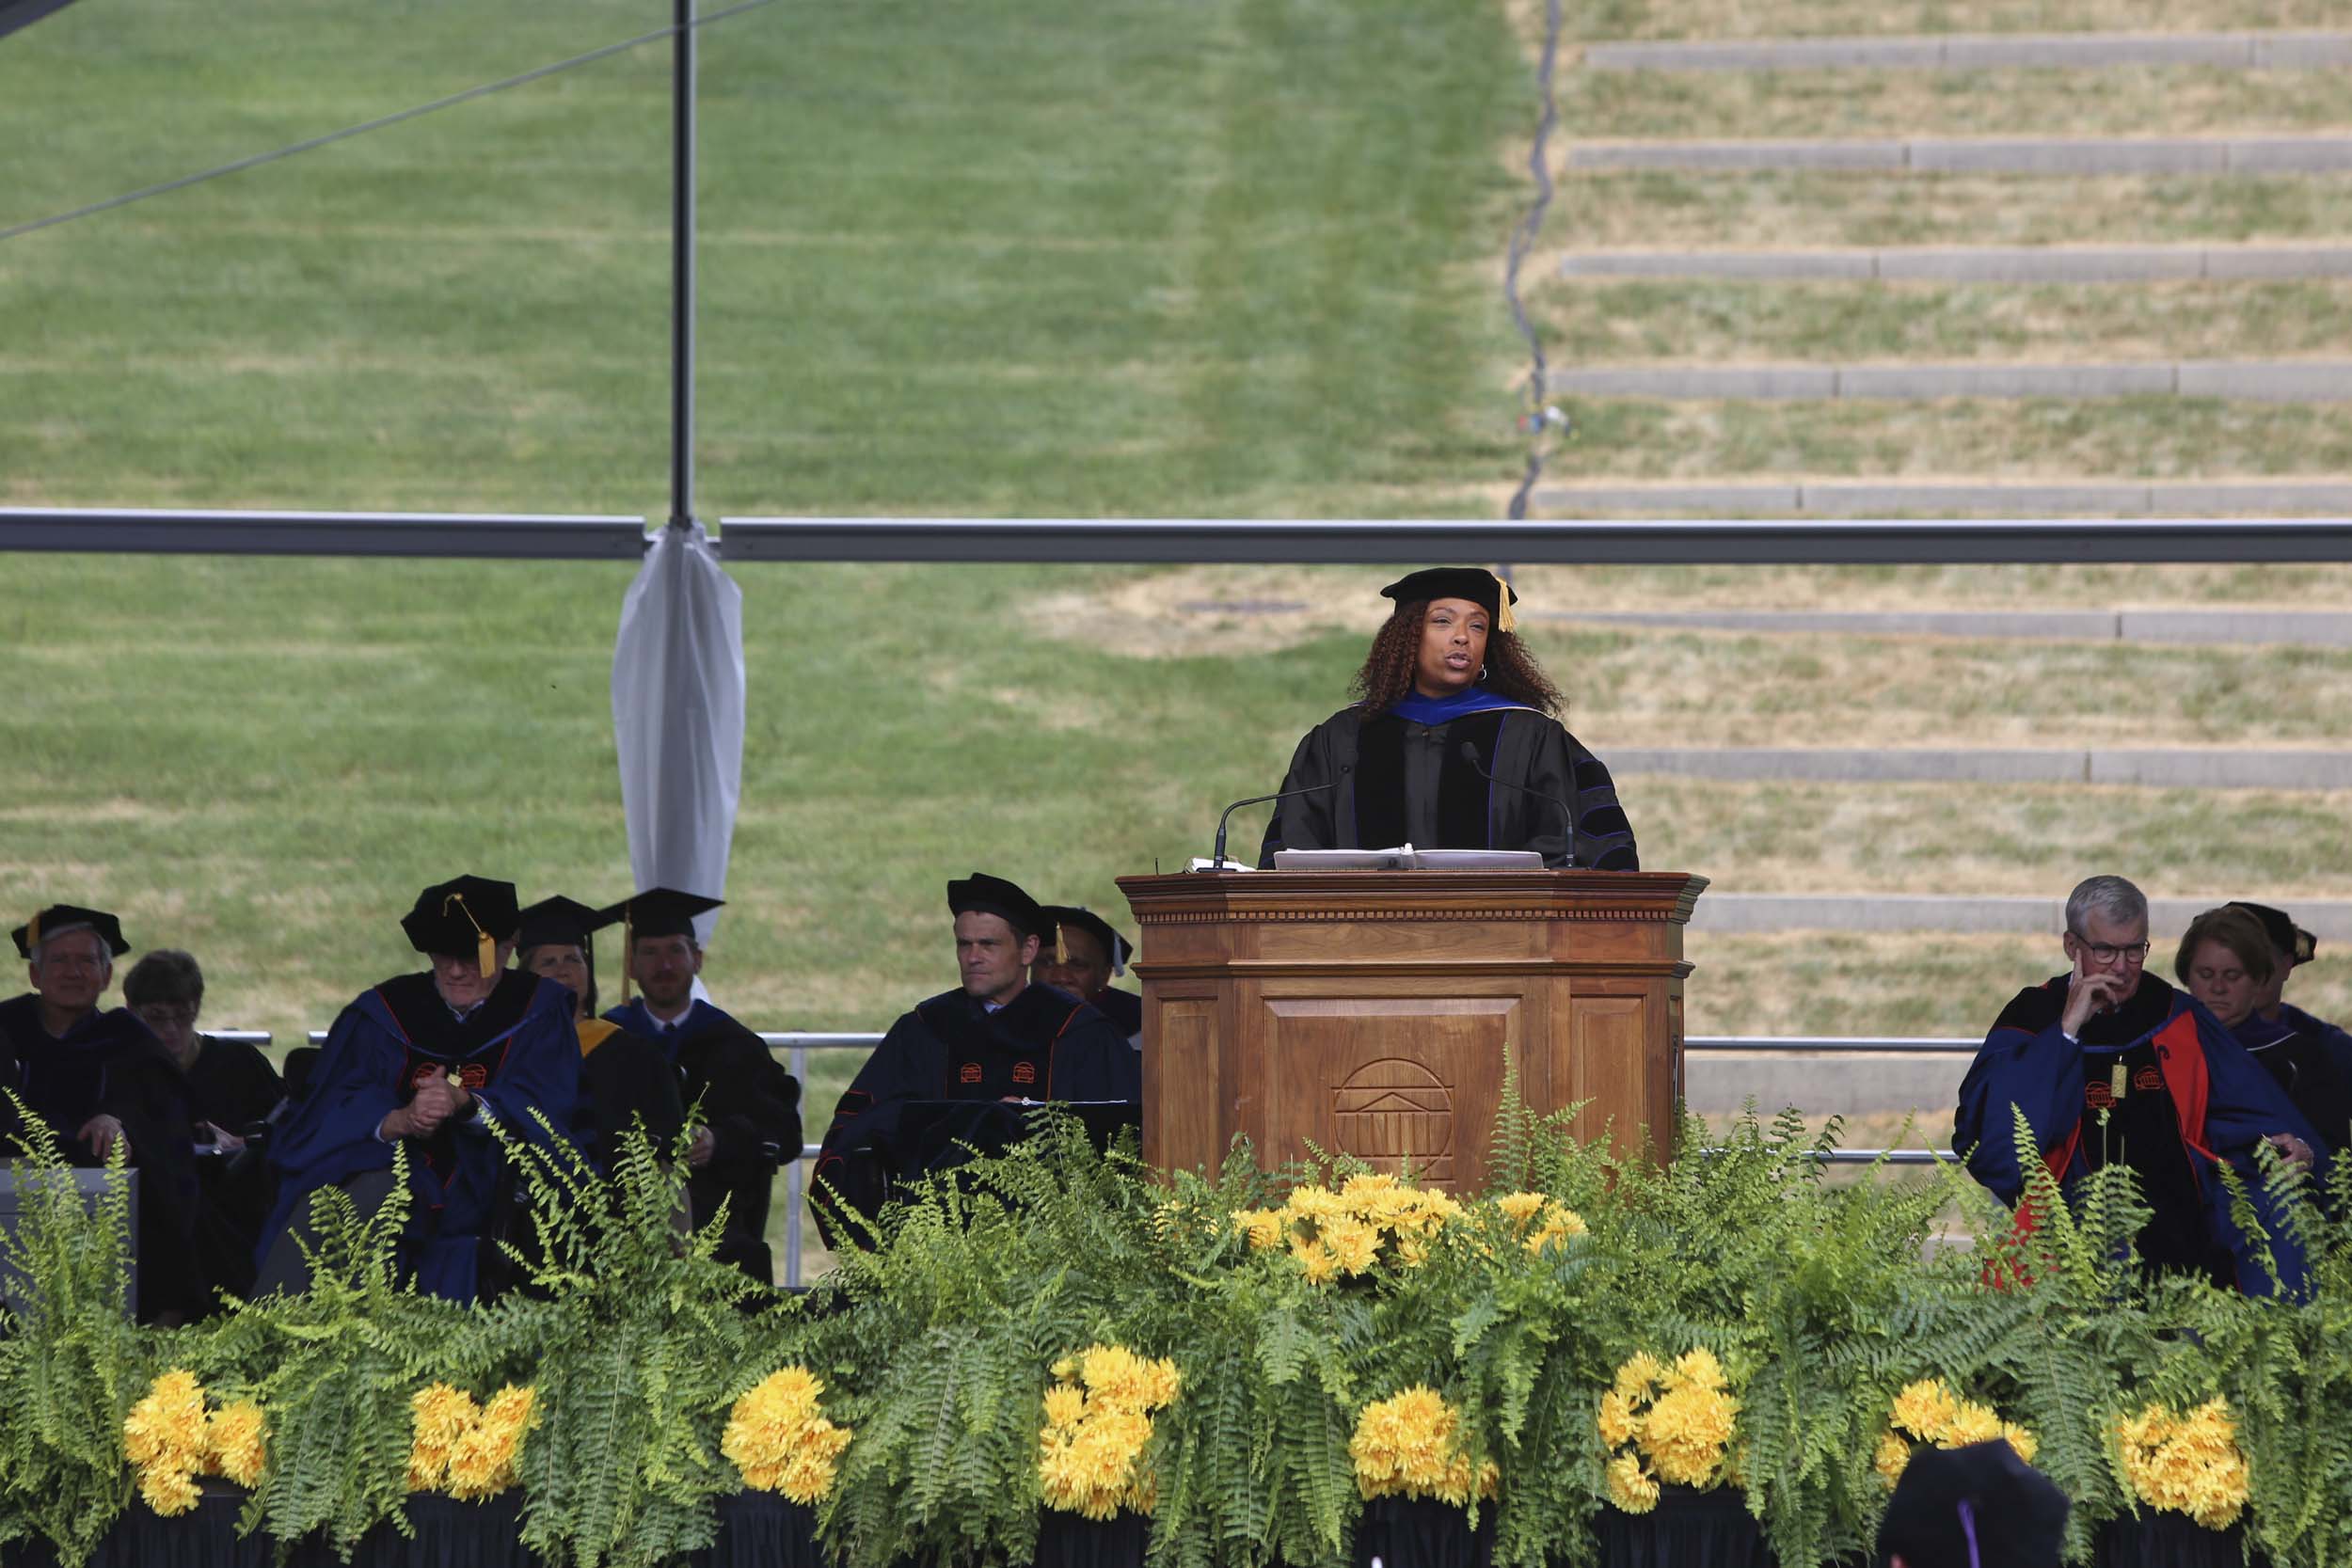 Graduation speaker standing at a big wooden podium